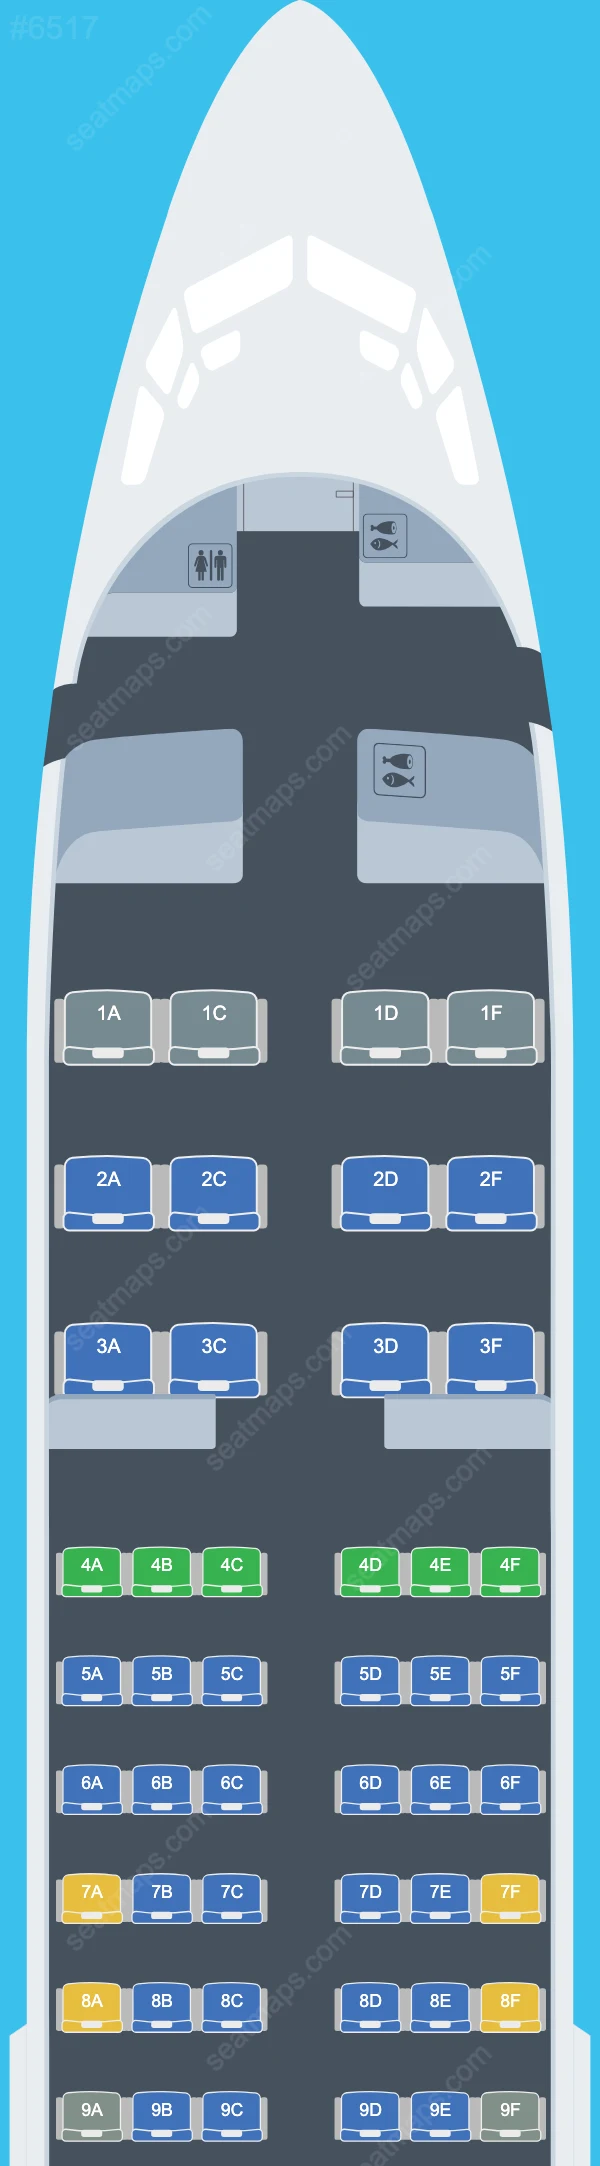 iAero Airways Boeing 737 Seat Maps 737-400 V.1